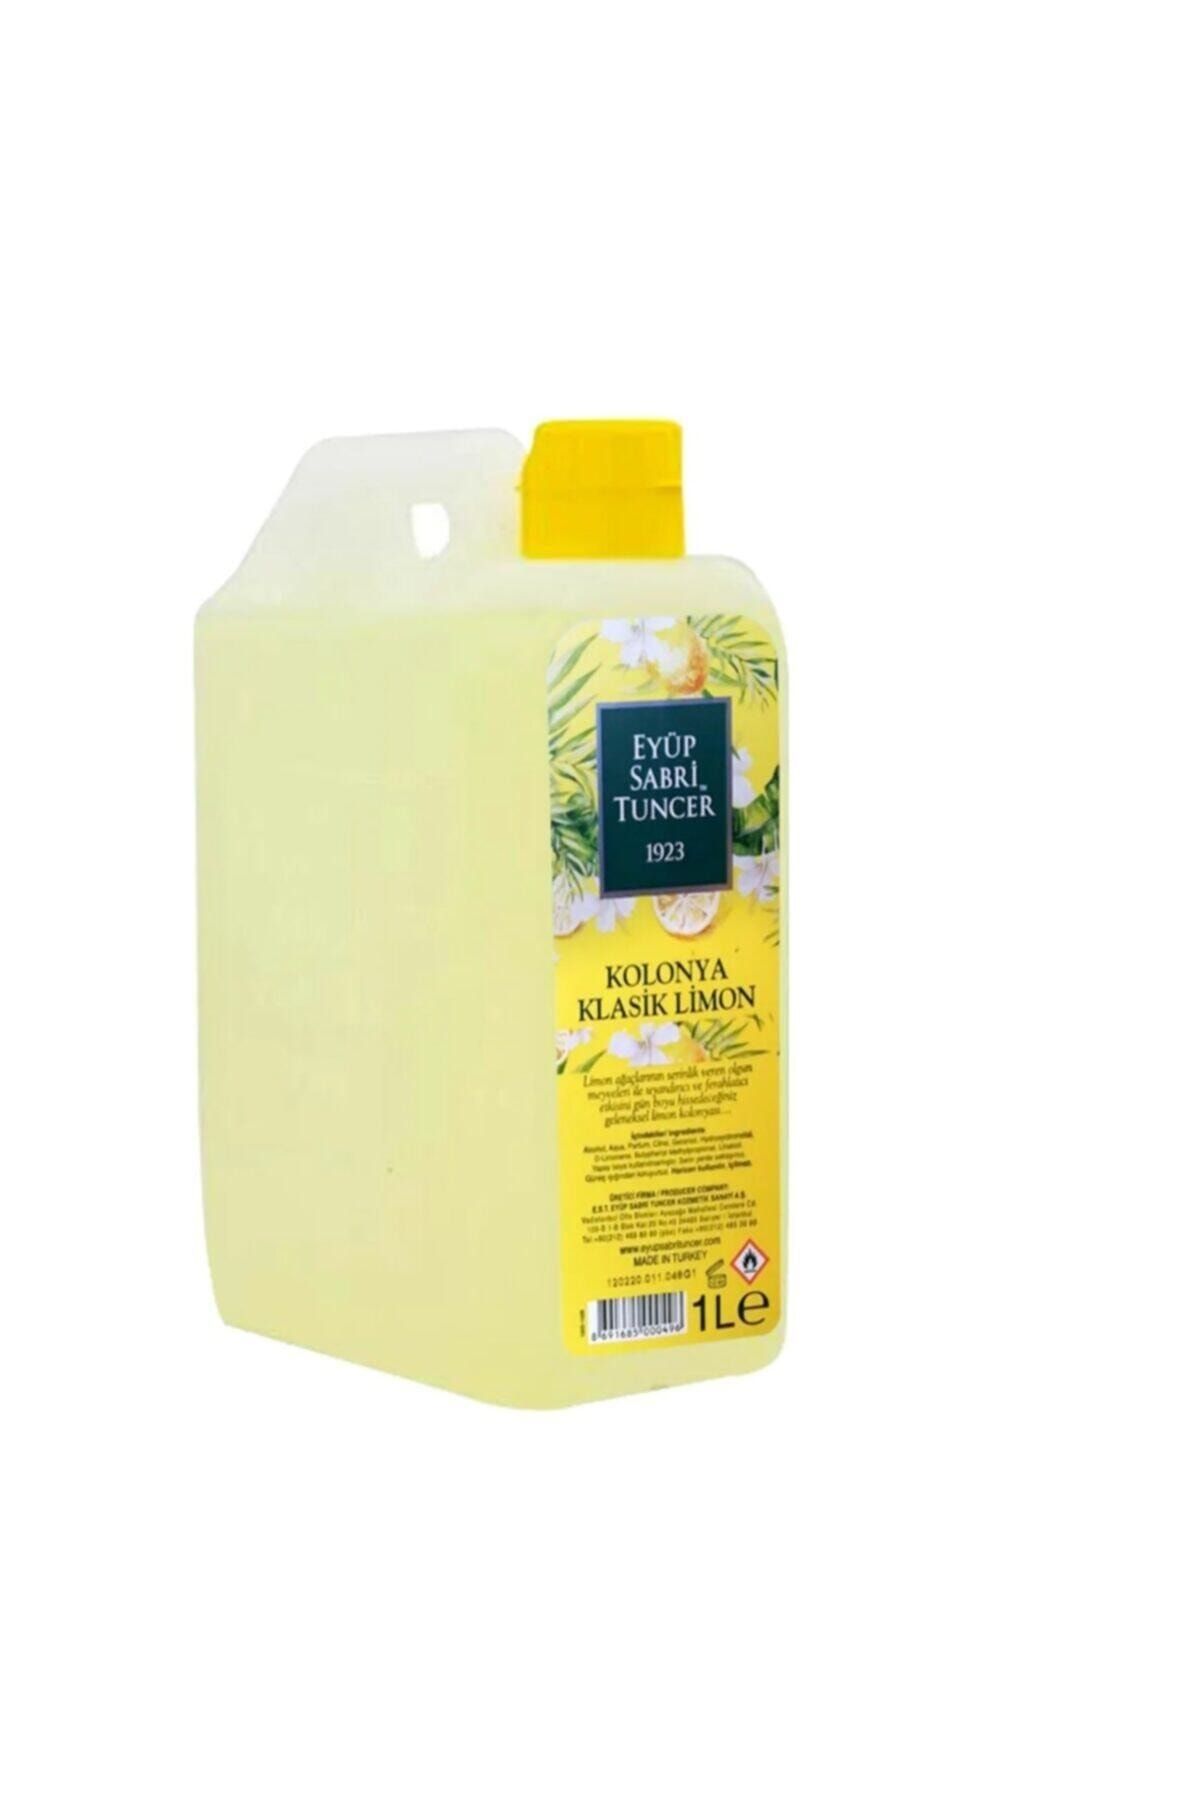 Eyüp Sabri Tuncer Klasik Limon Kolonya 1 Litre 80 Derece Bidon